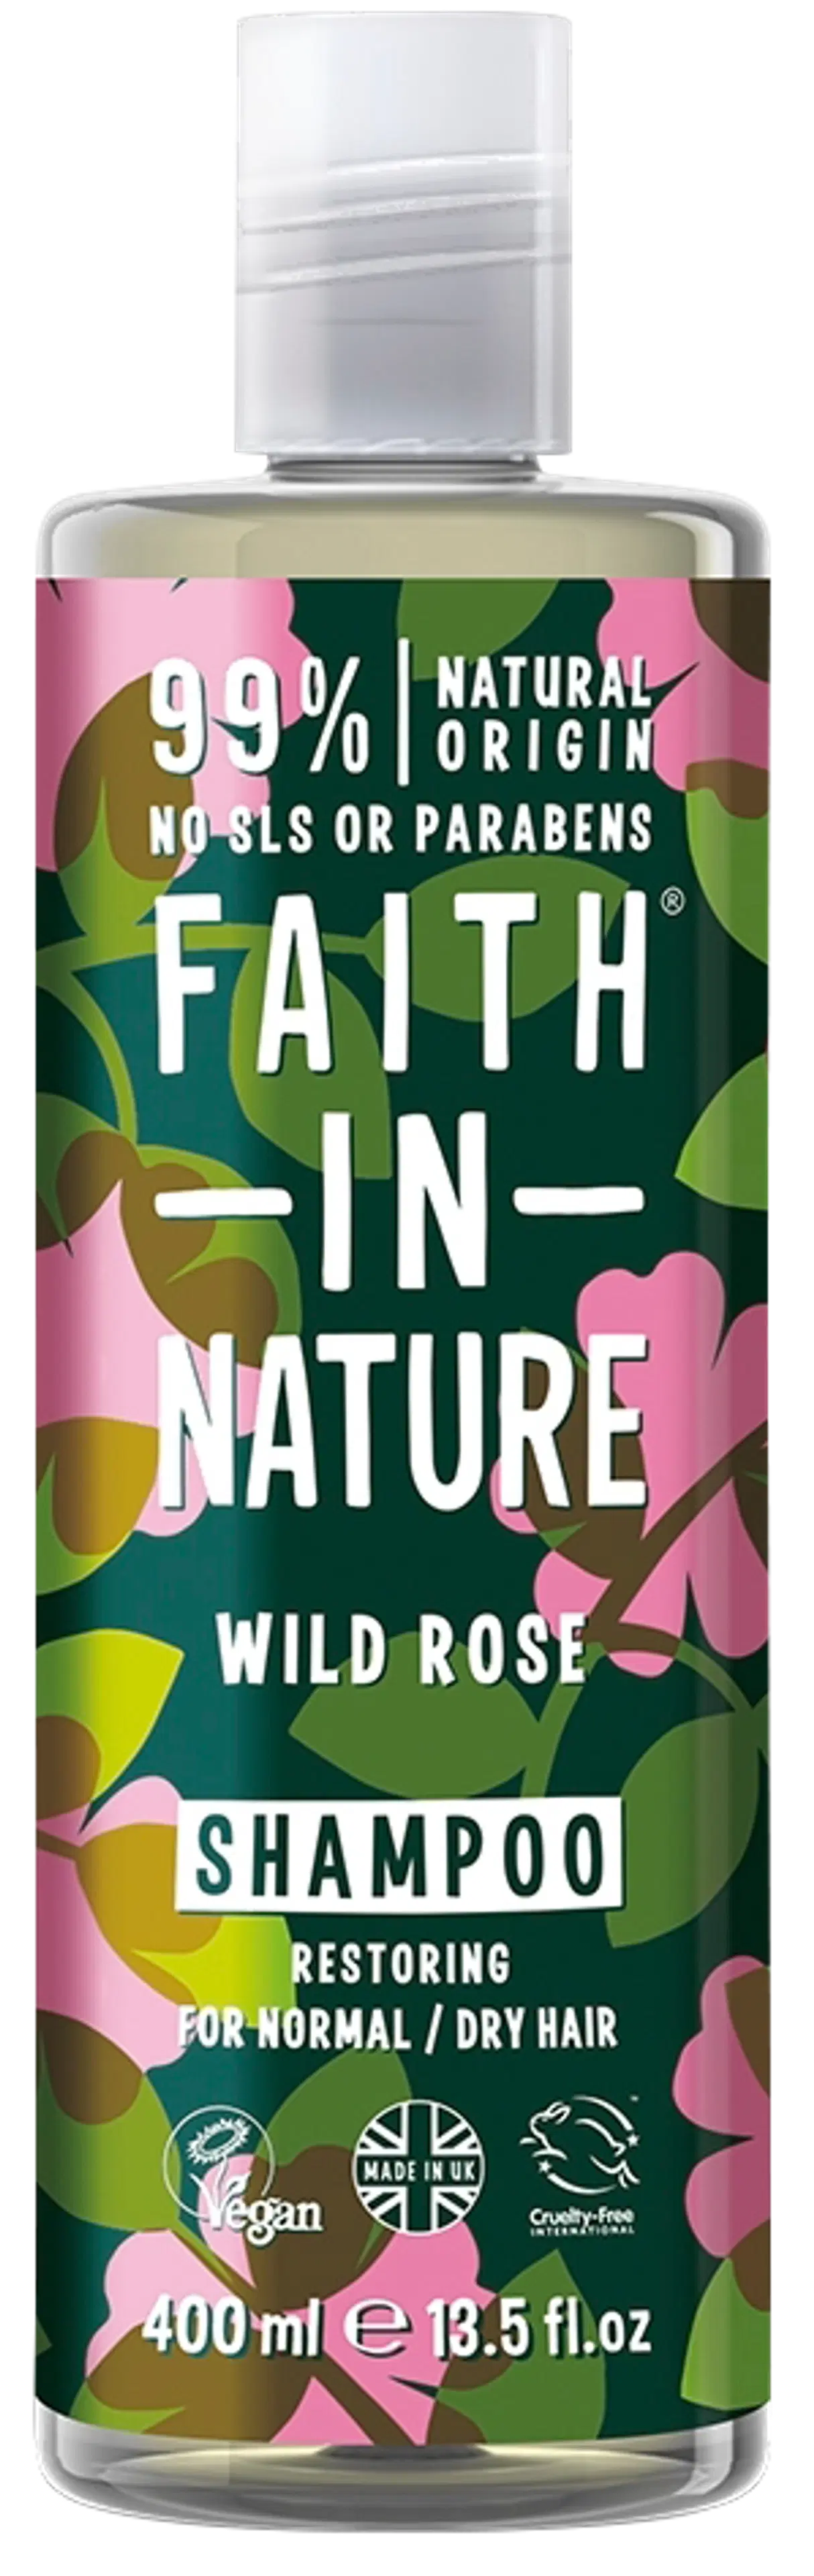 Faith in Nature Shampoo Wild Rose 400ml